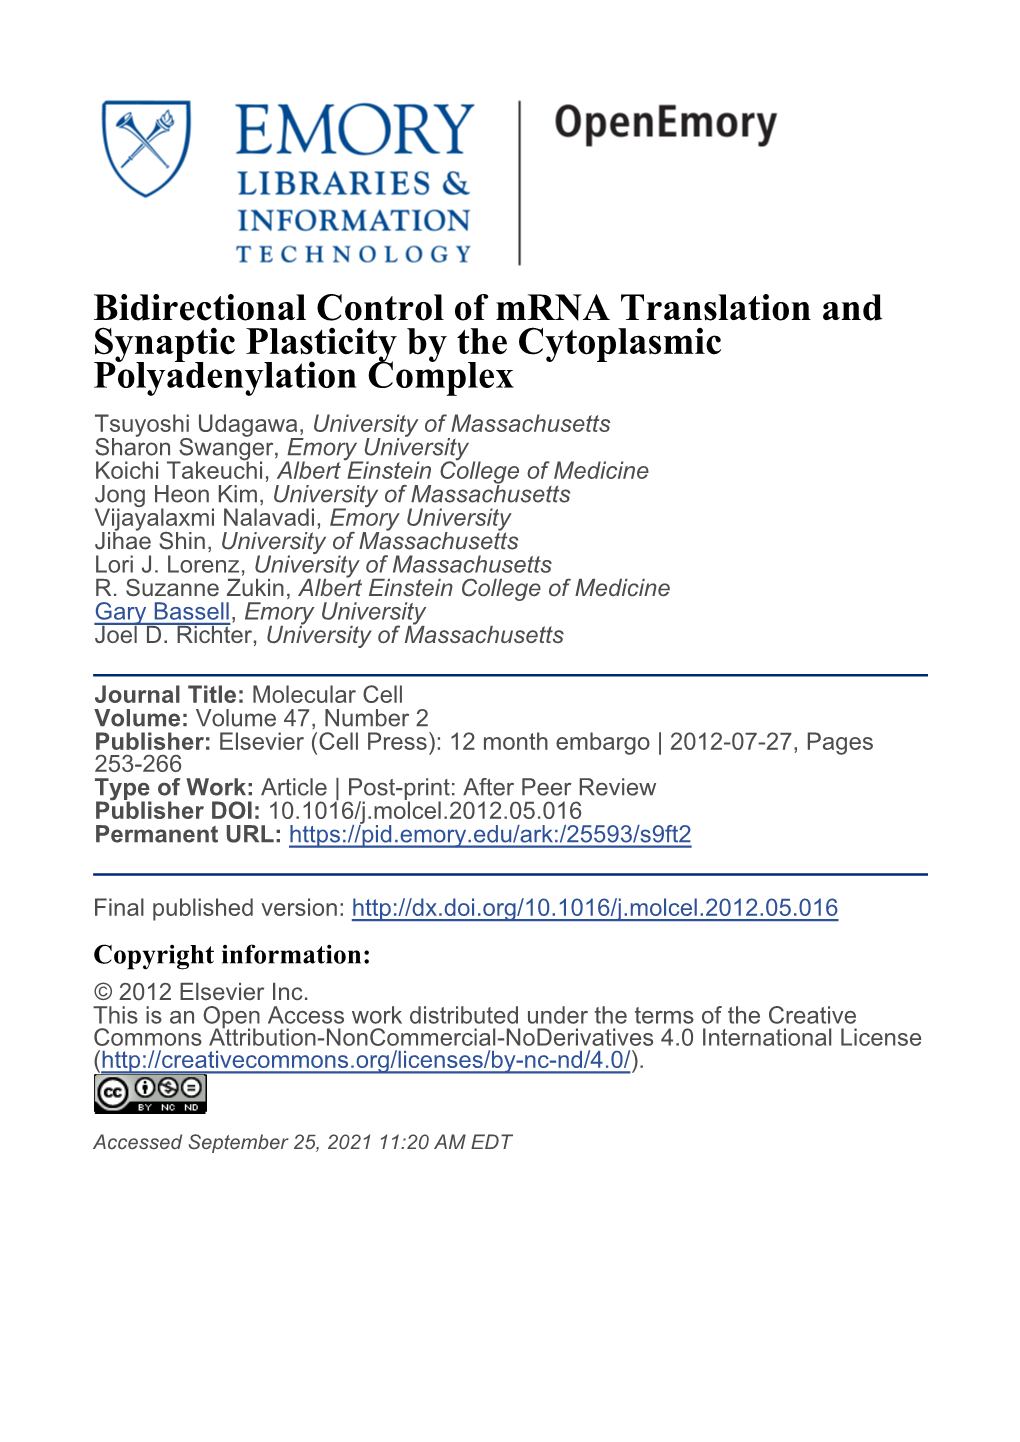 Bidirectional Control of Mrna Translation and Synaptic Plasticity